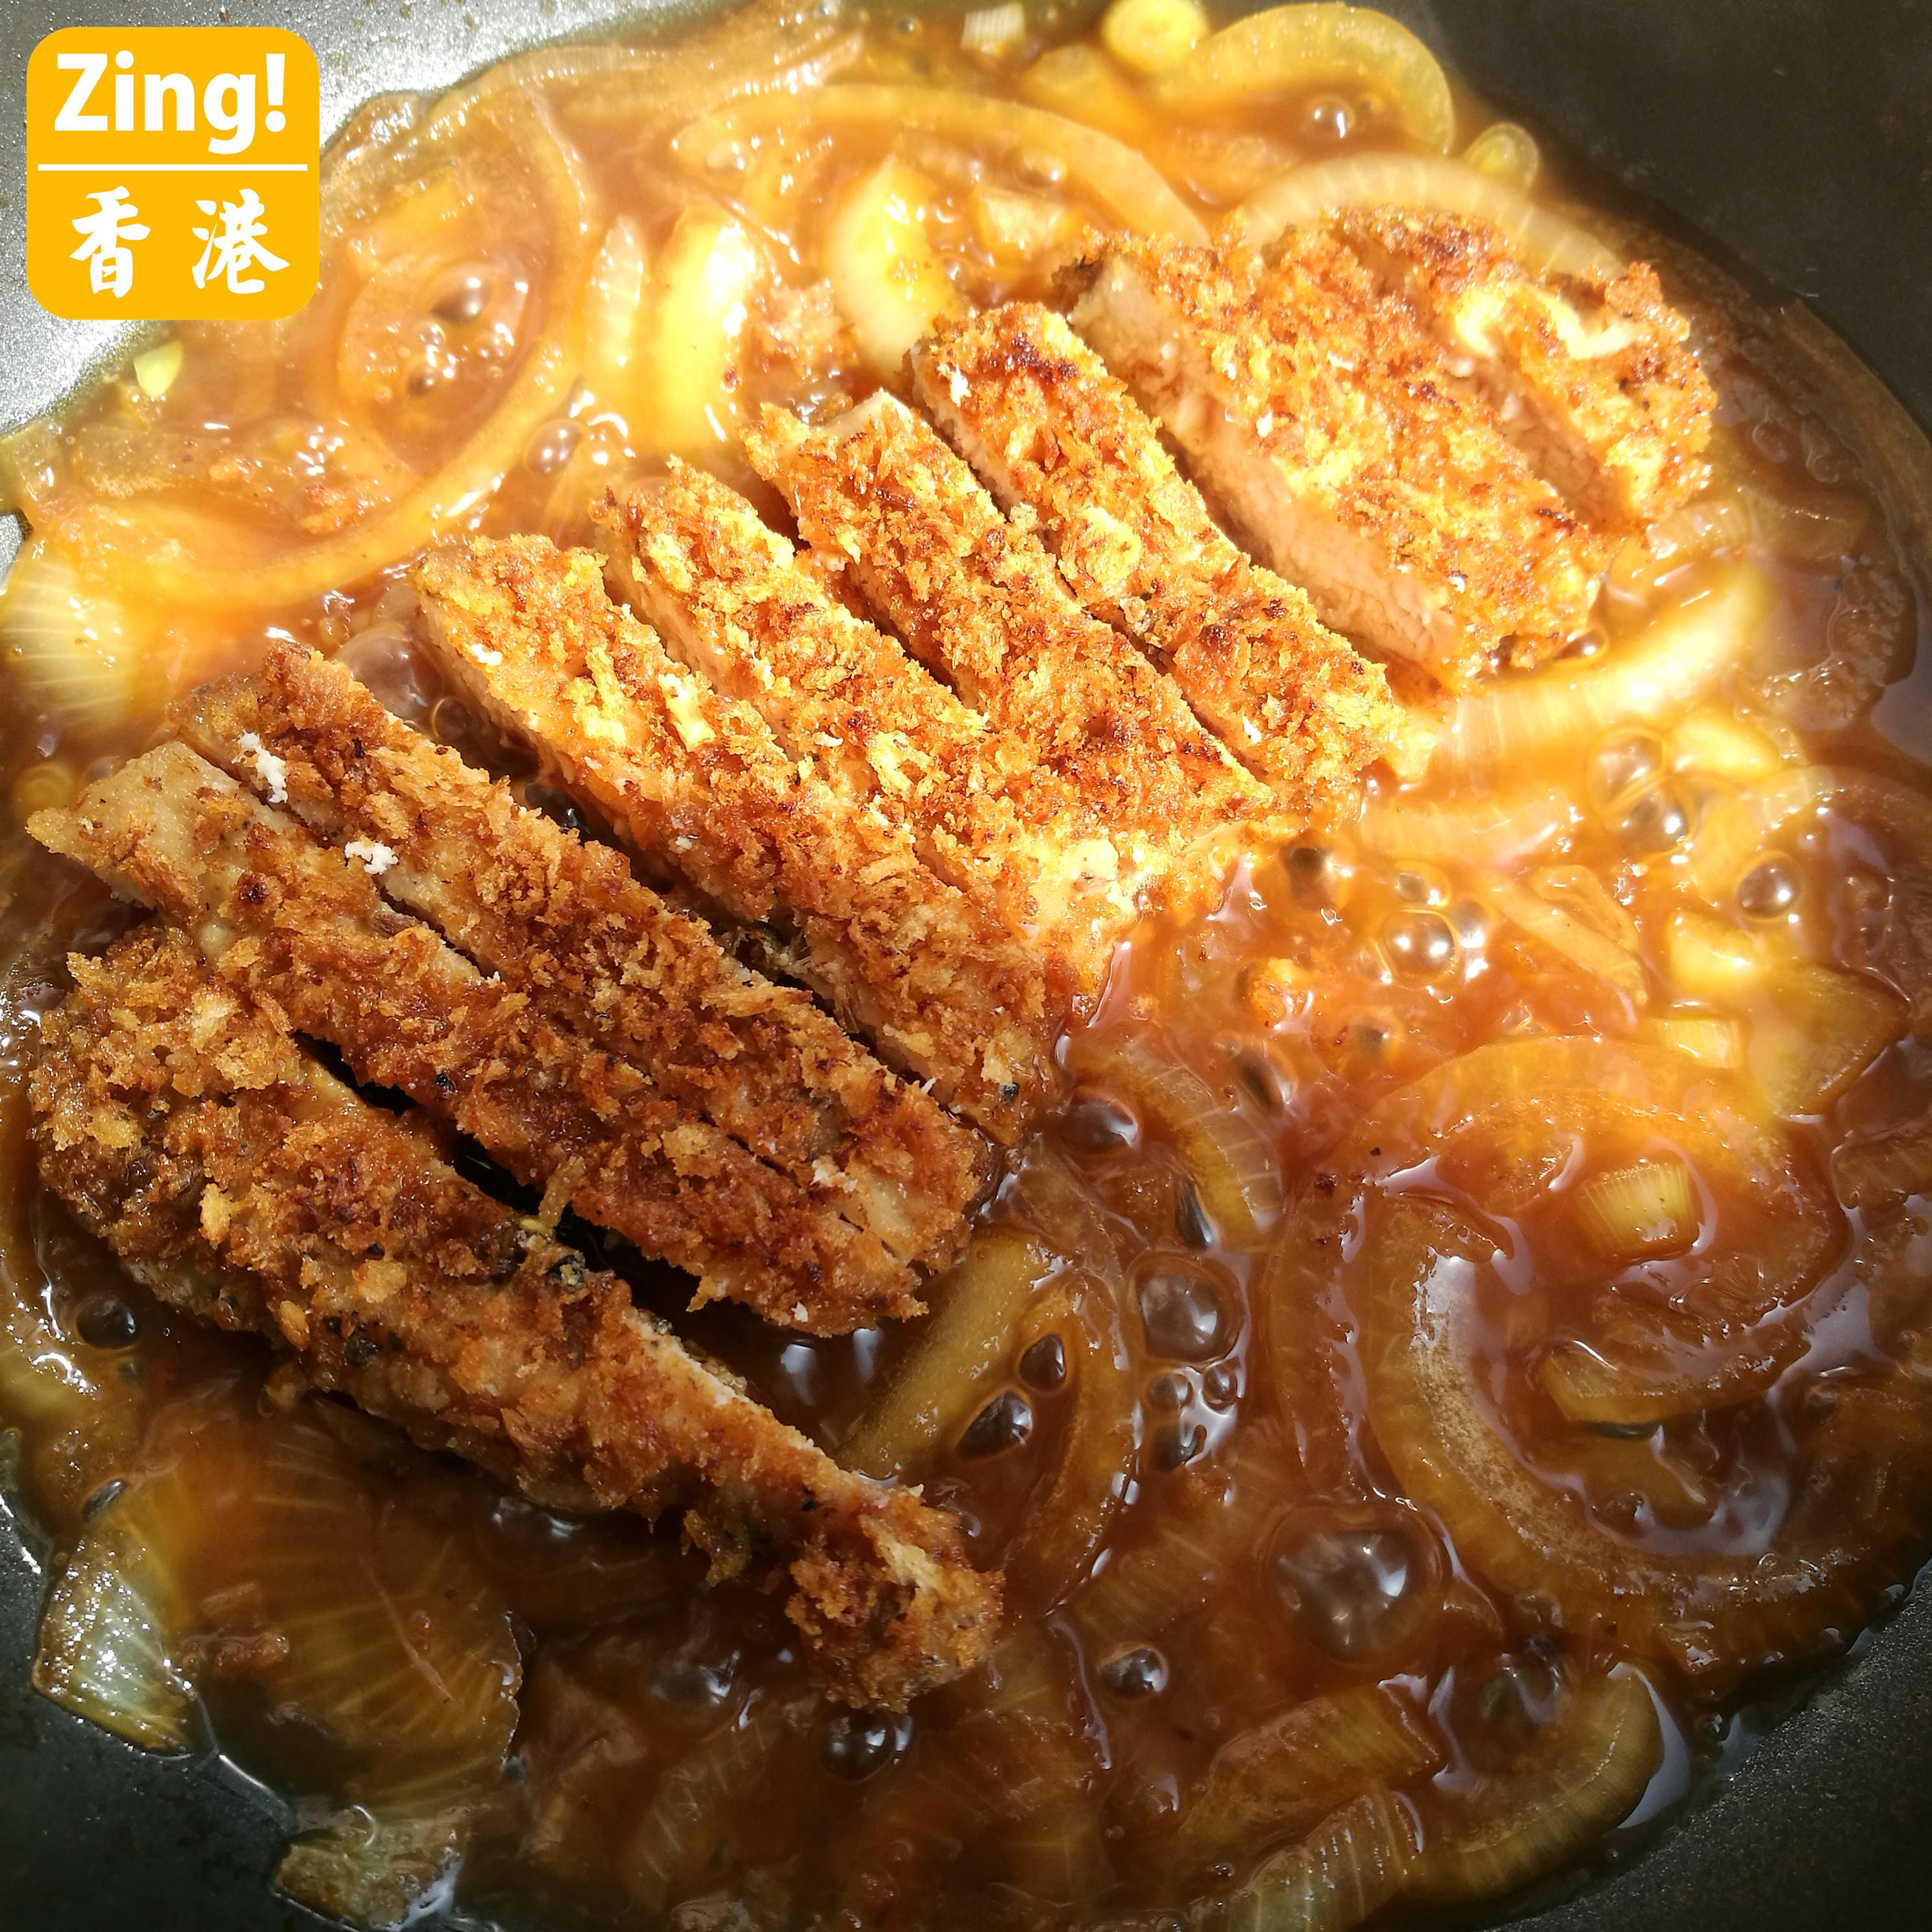 ZapPaLang: 湿版洋葱猪扒 Gravy Version Onion with Pork Chop